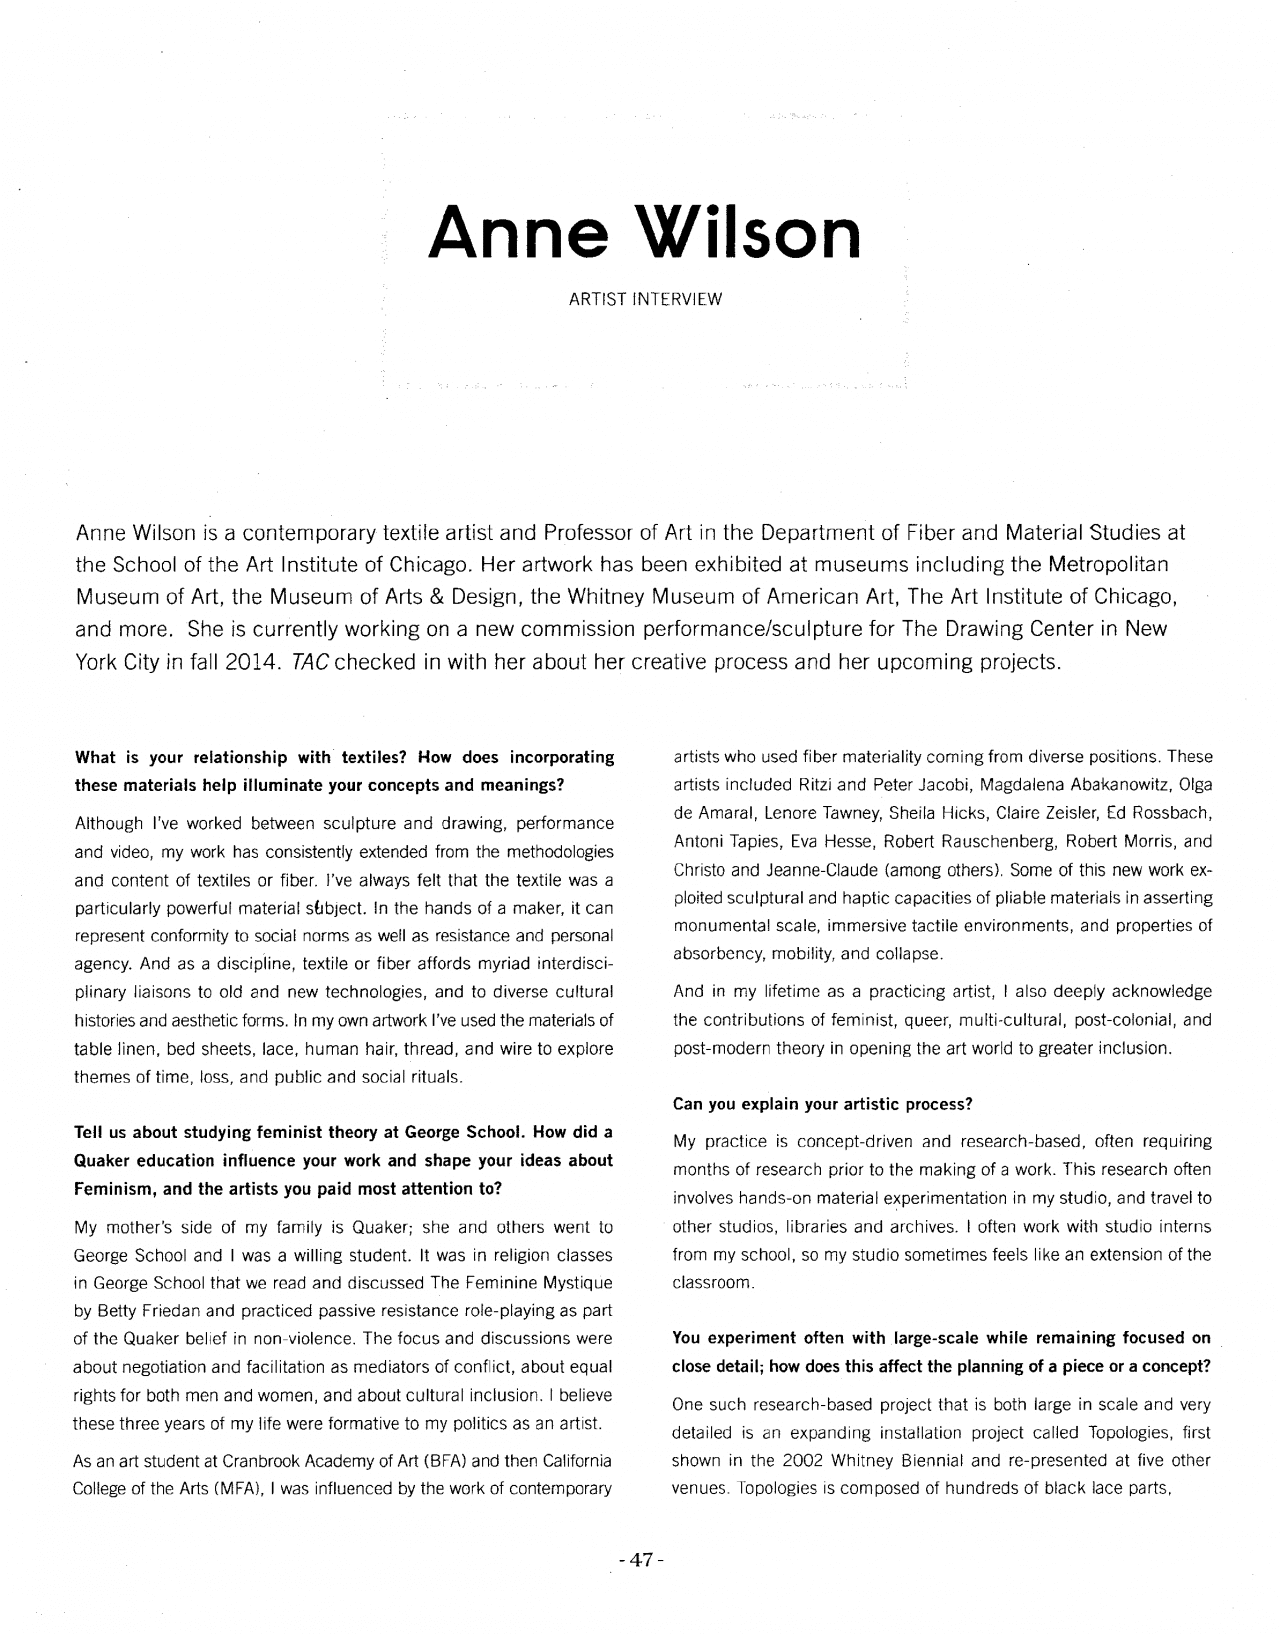 Anne Wilson Interivew 2014 PAGE 1 Final